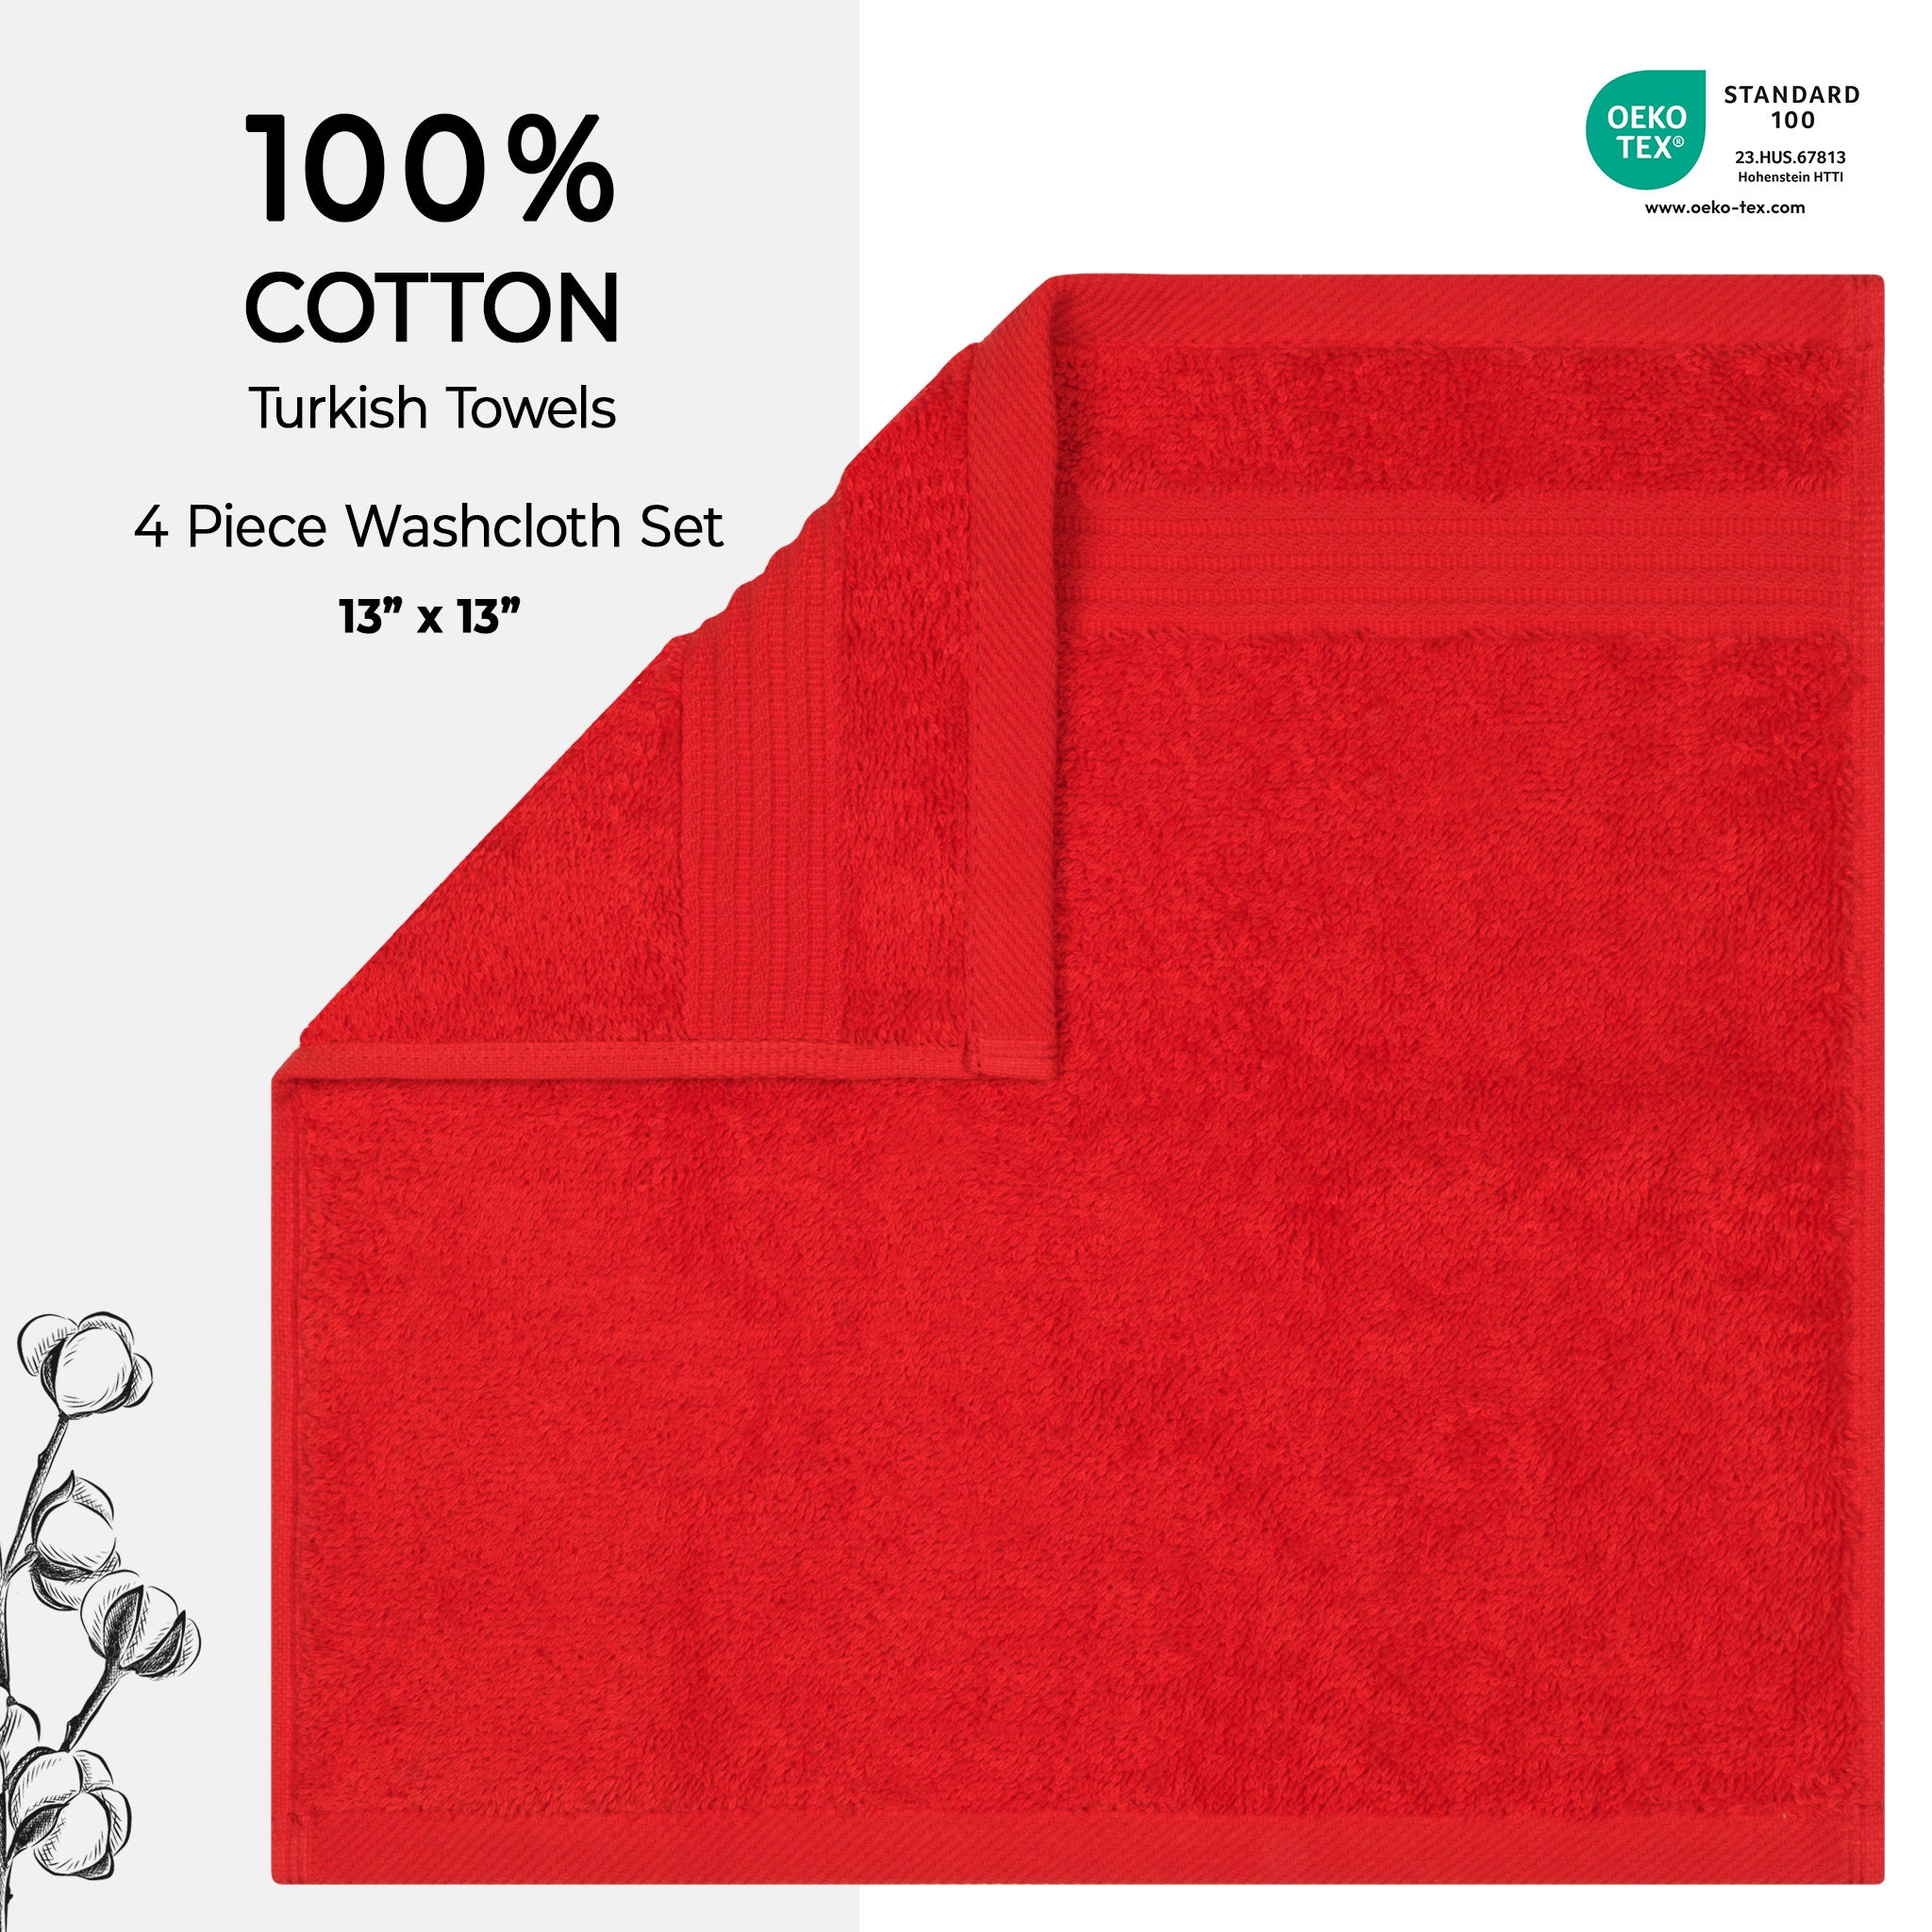 American Soft Linen Bekos 100% Cotton Turkish Towels, 4 Piece Washcloth Towel Set -red-02